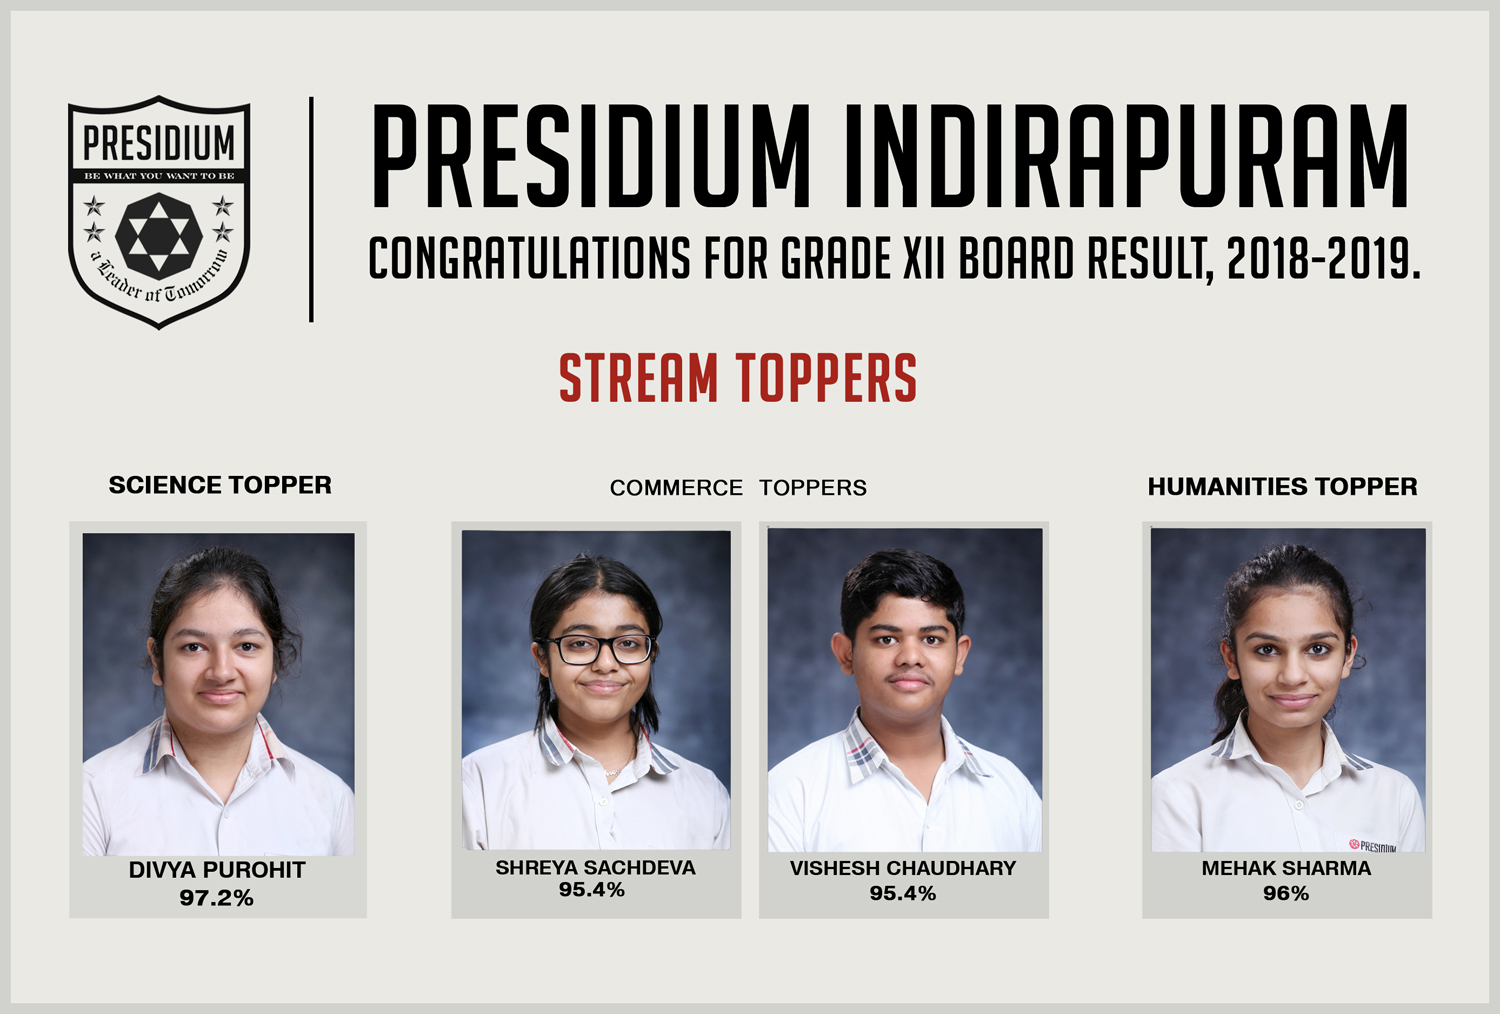 Presidium Indirapuram, CLASS 12 STUDENTS DELIVER OUTSTANDING RESULTS IN BOARDS